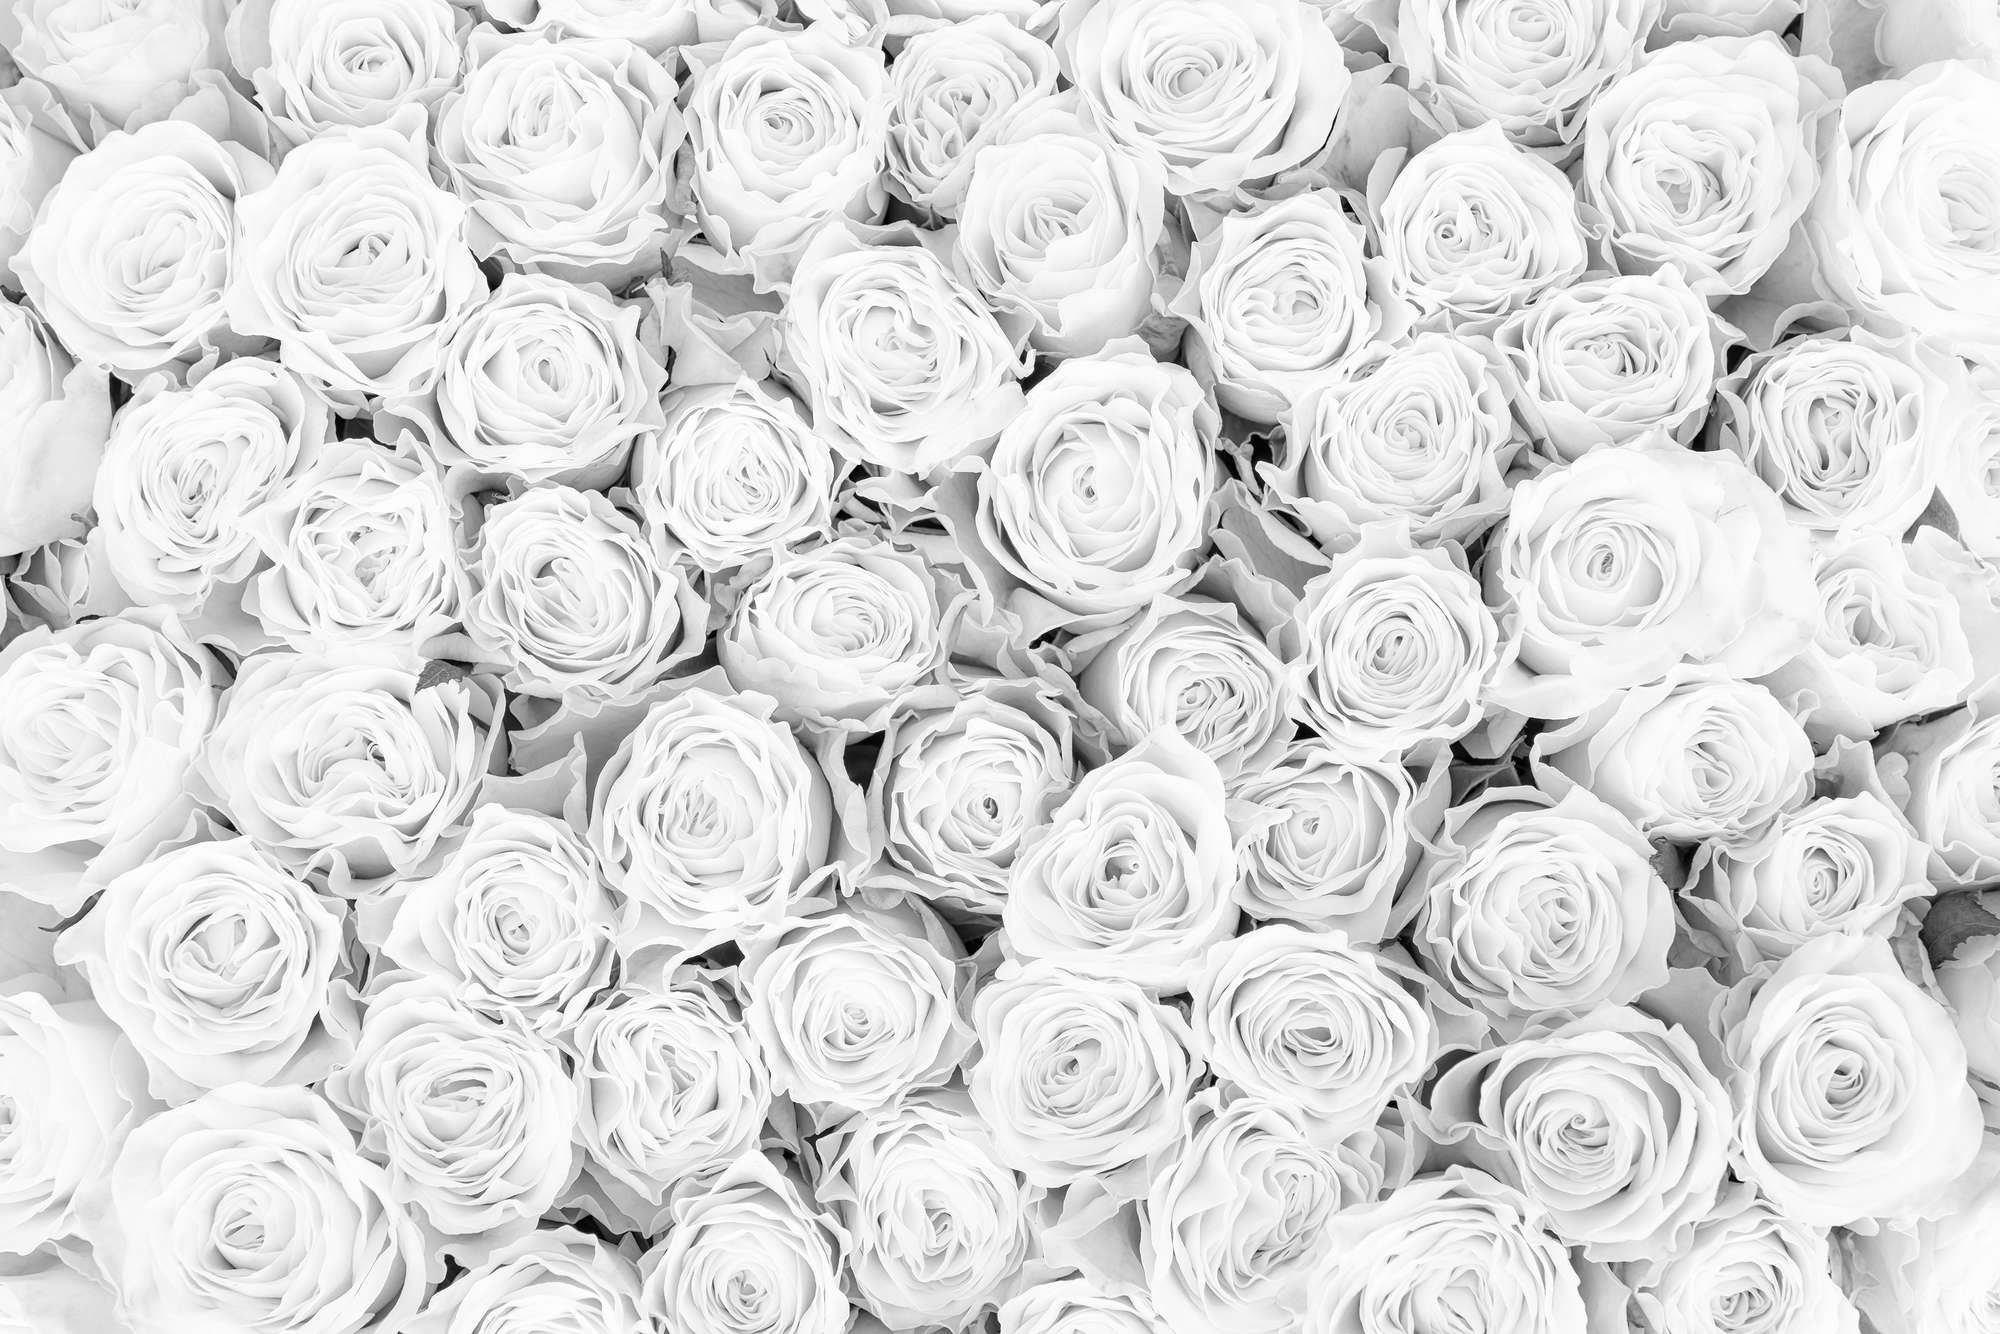             Plants mural white roses on premium smooth fleece
        